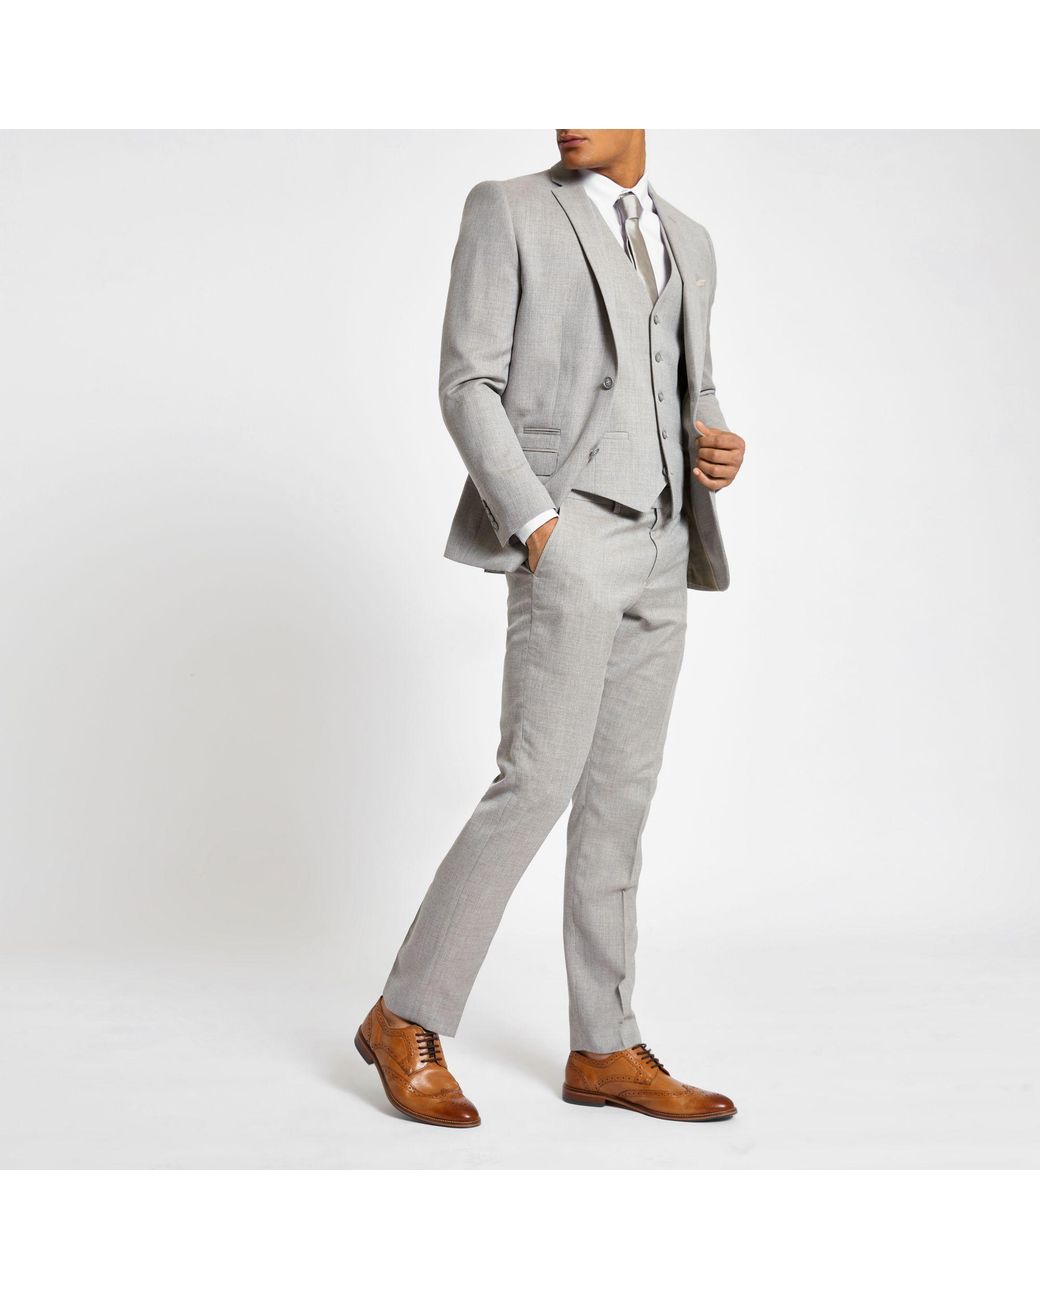 Men Gray Suits Designer Wedding Grooms Dinner Casual Suit JacketVestPants   eBay  Grey suit men Mens fashion suits Mens suits